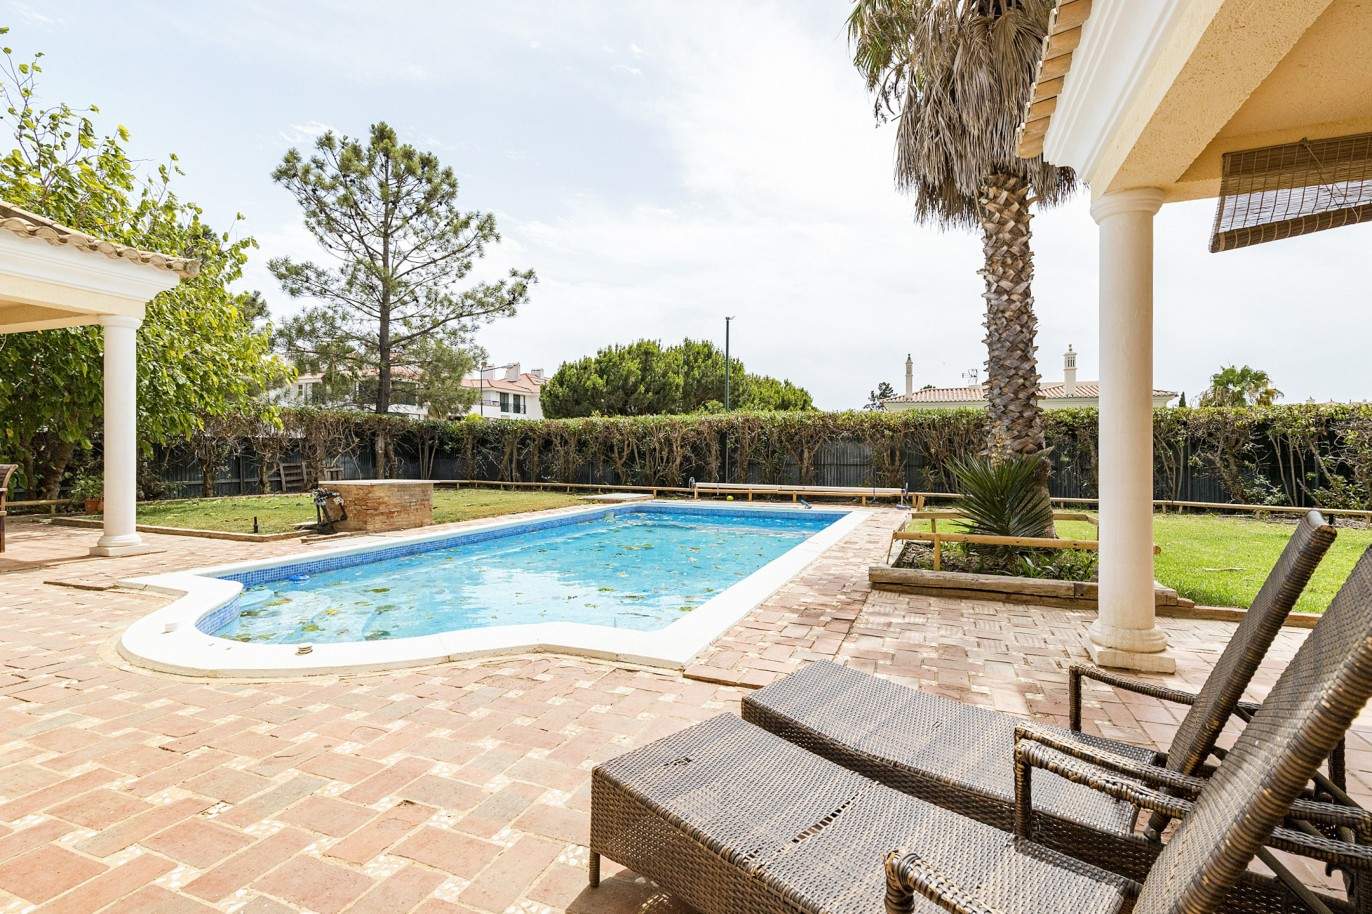 Moradia V4, com piscina, para venda, em Vila Sol, Algarve_203453